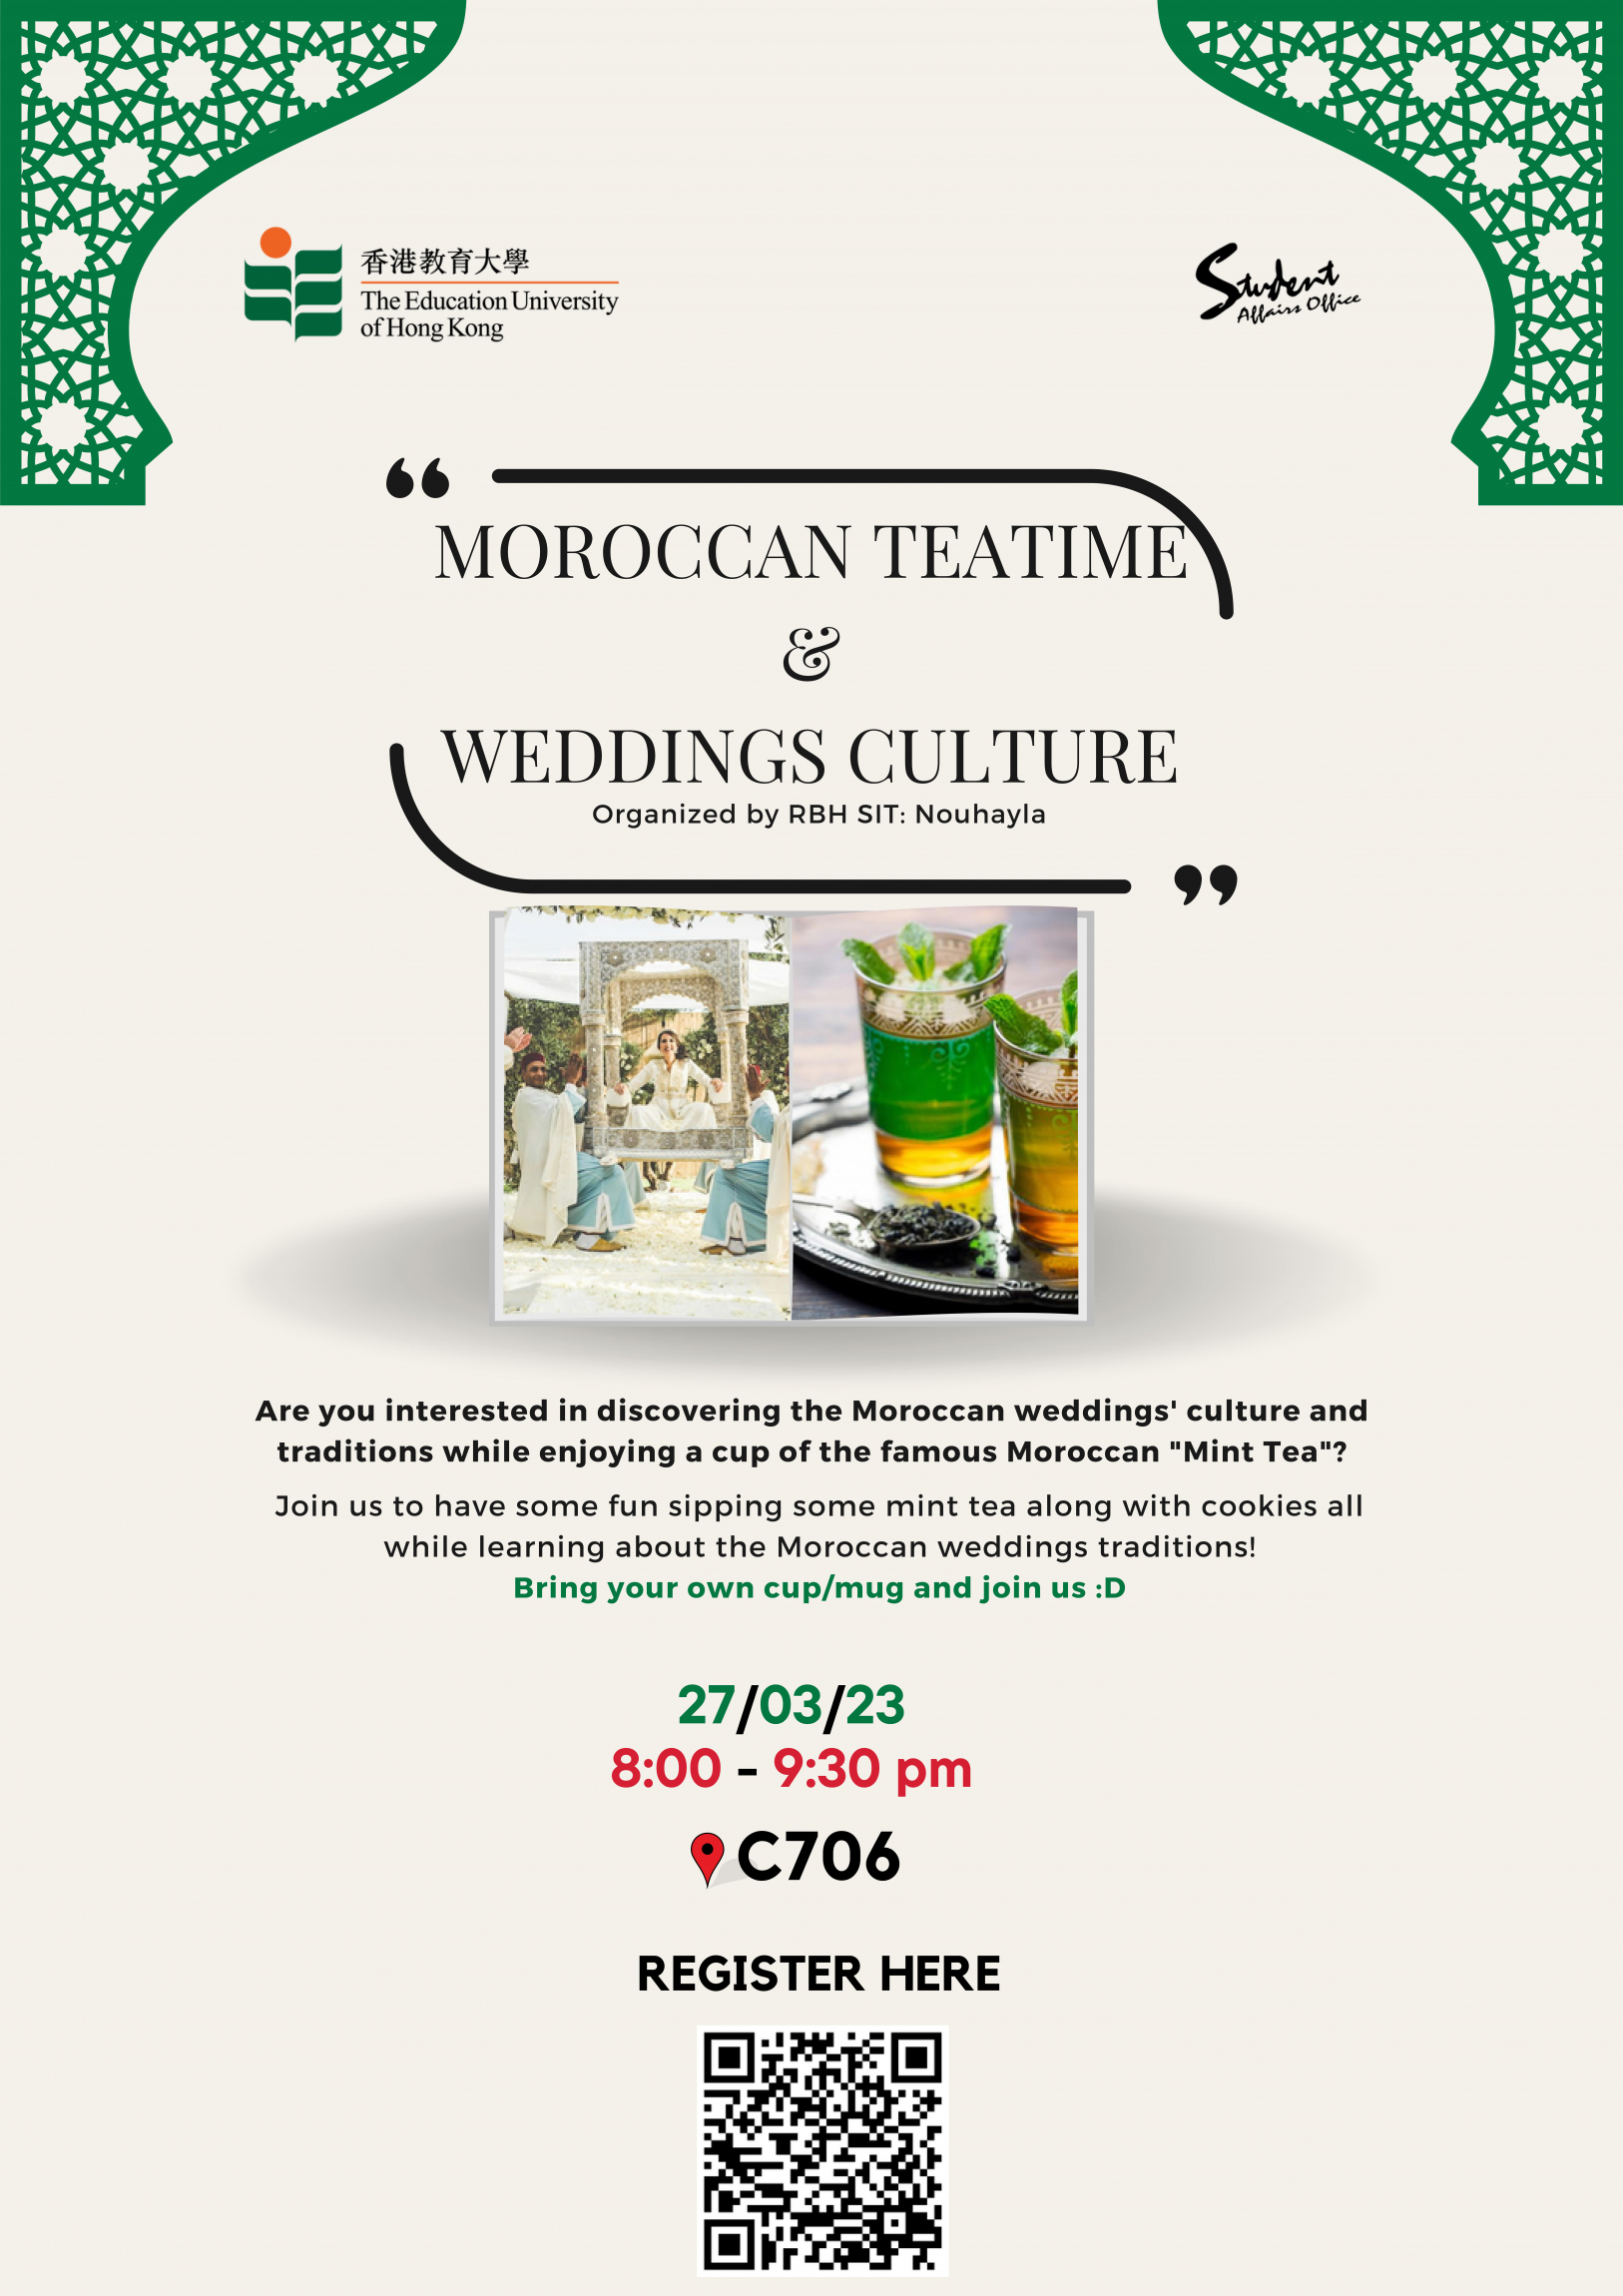 Self Photos / Files - 3. Moroccan Teatime & Weddings Culture_1 